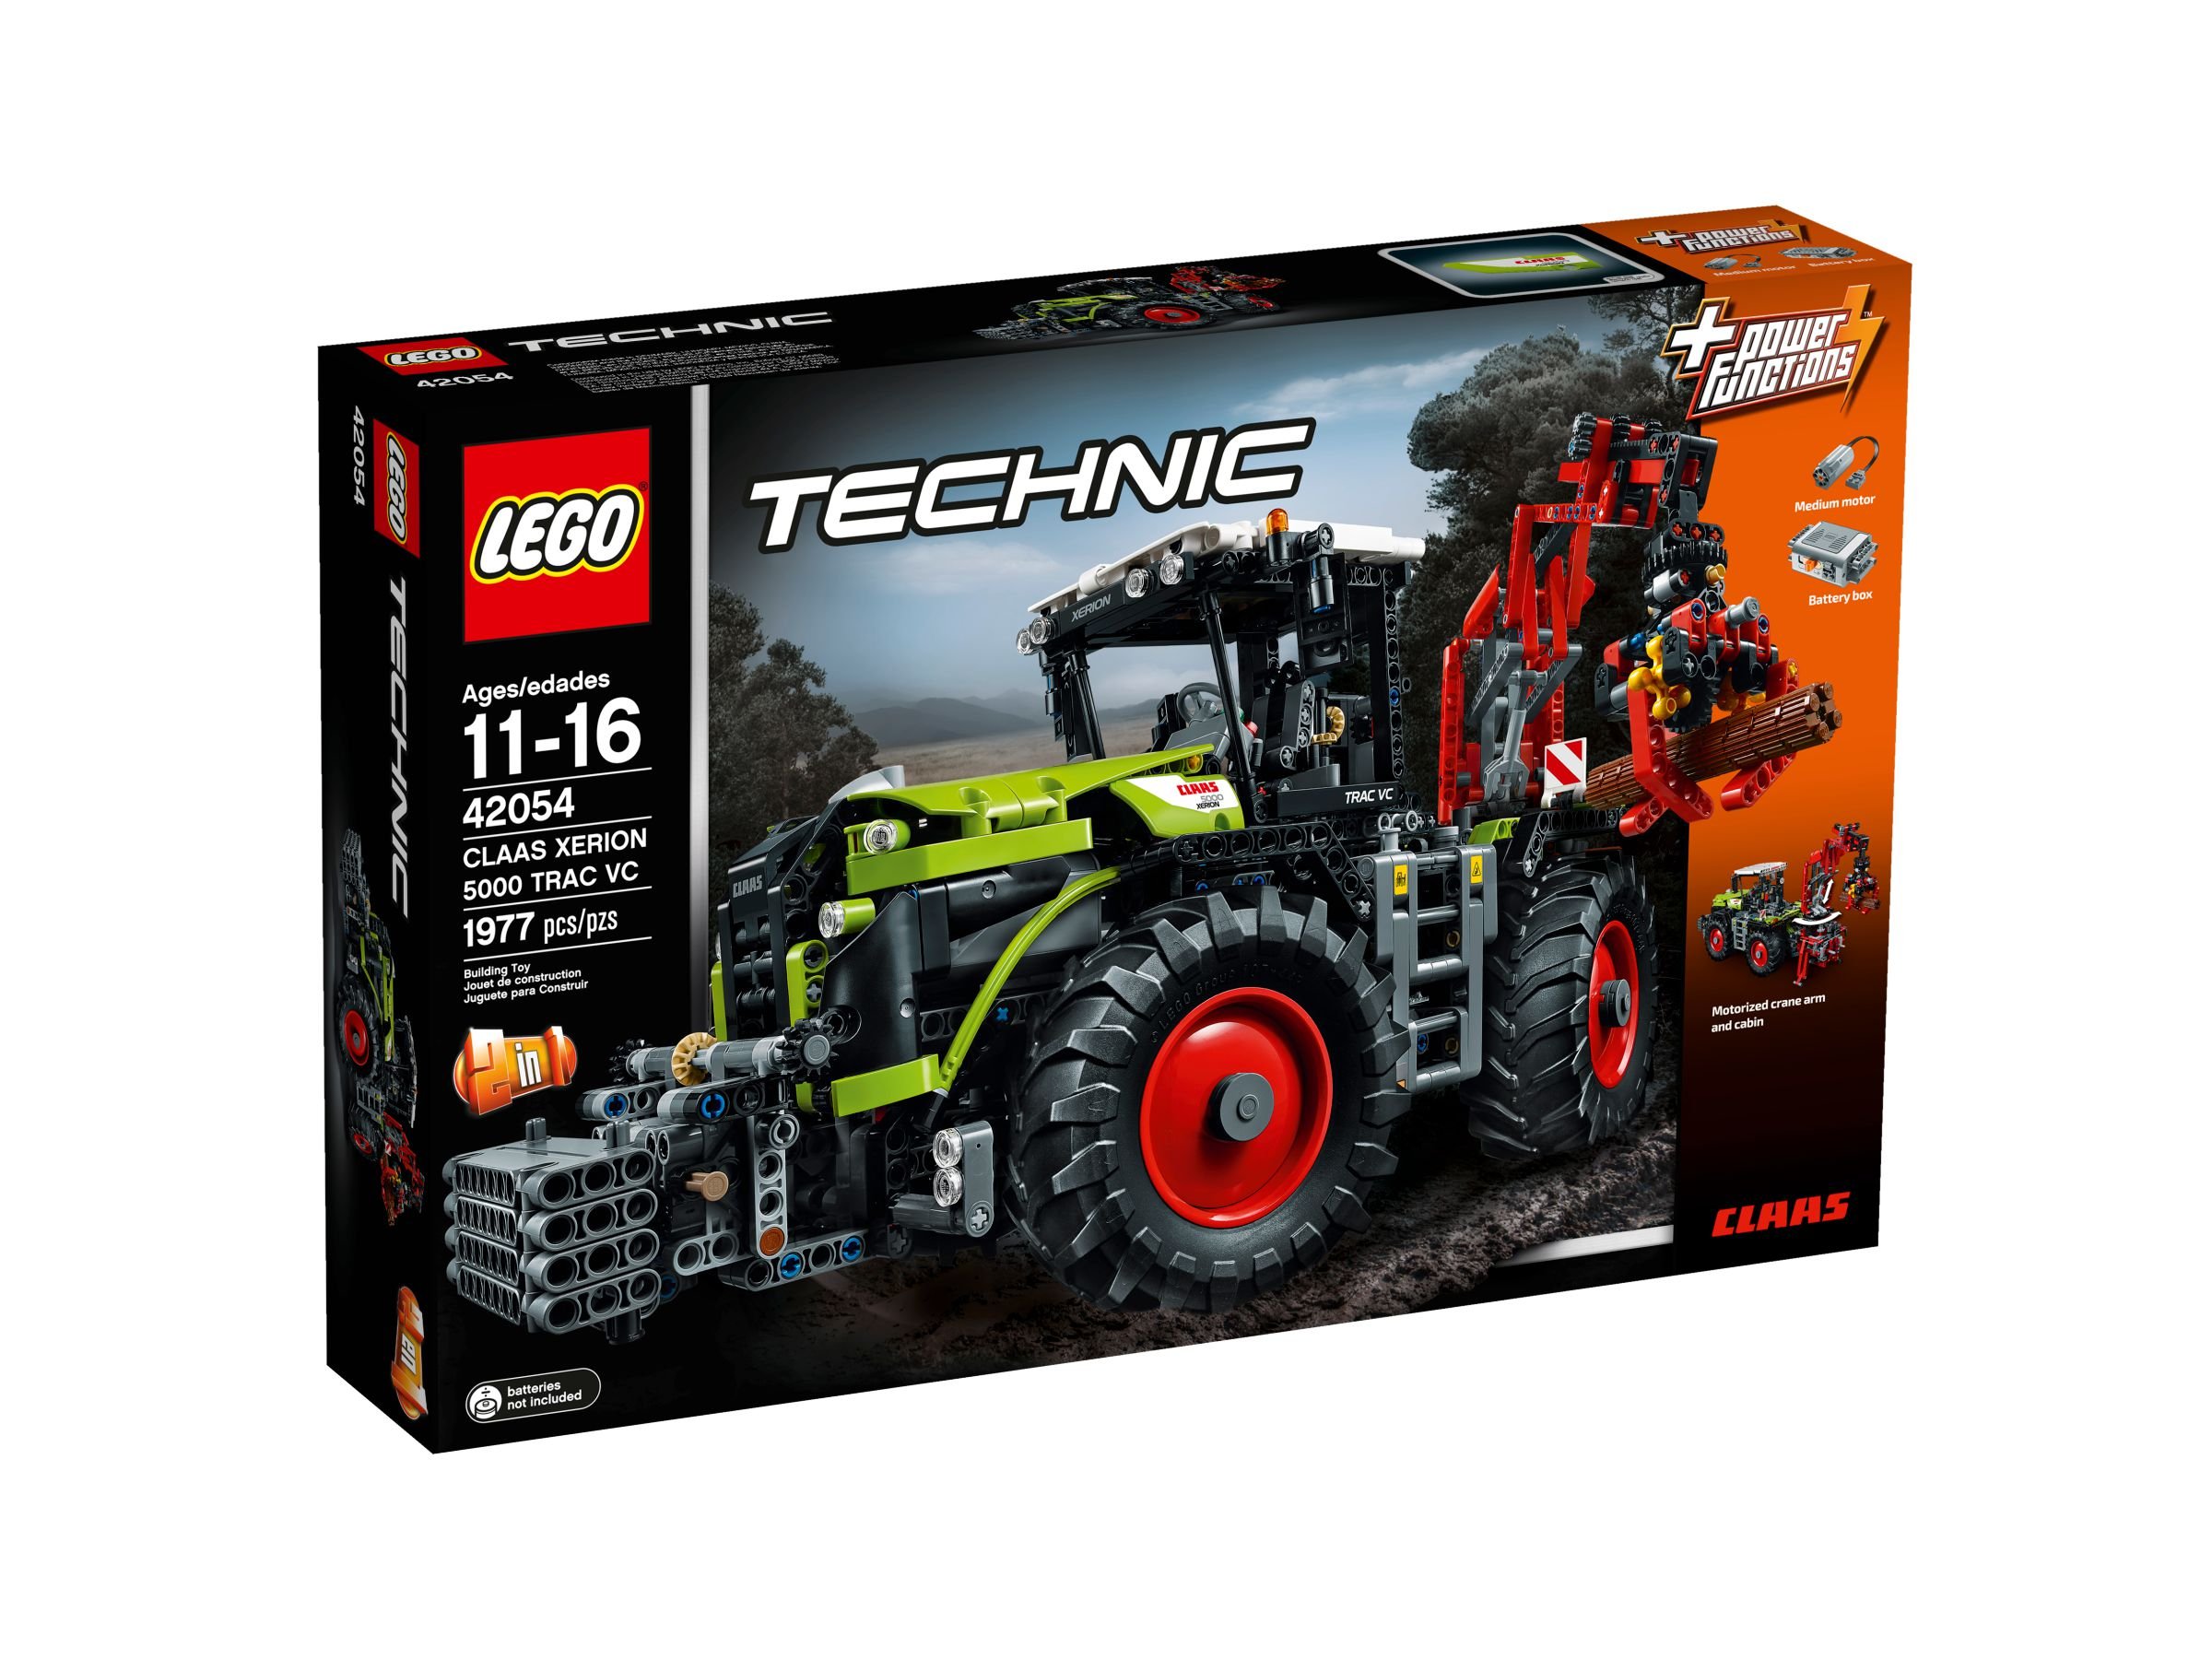 LEGO Technic 42054 CLAAS XERION 5000 TRAC VC LEGO_42054_alt1.jpg